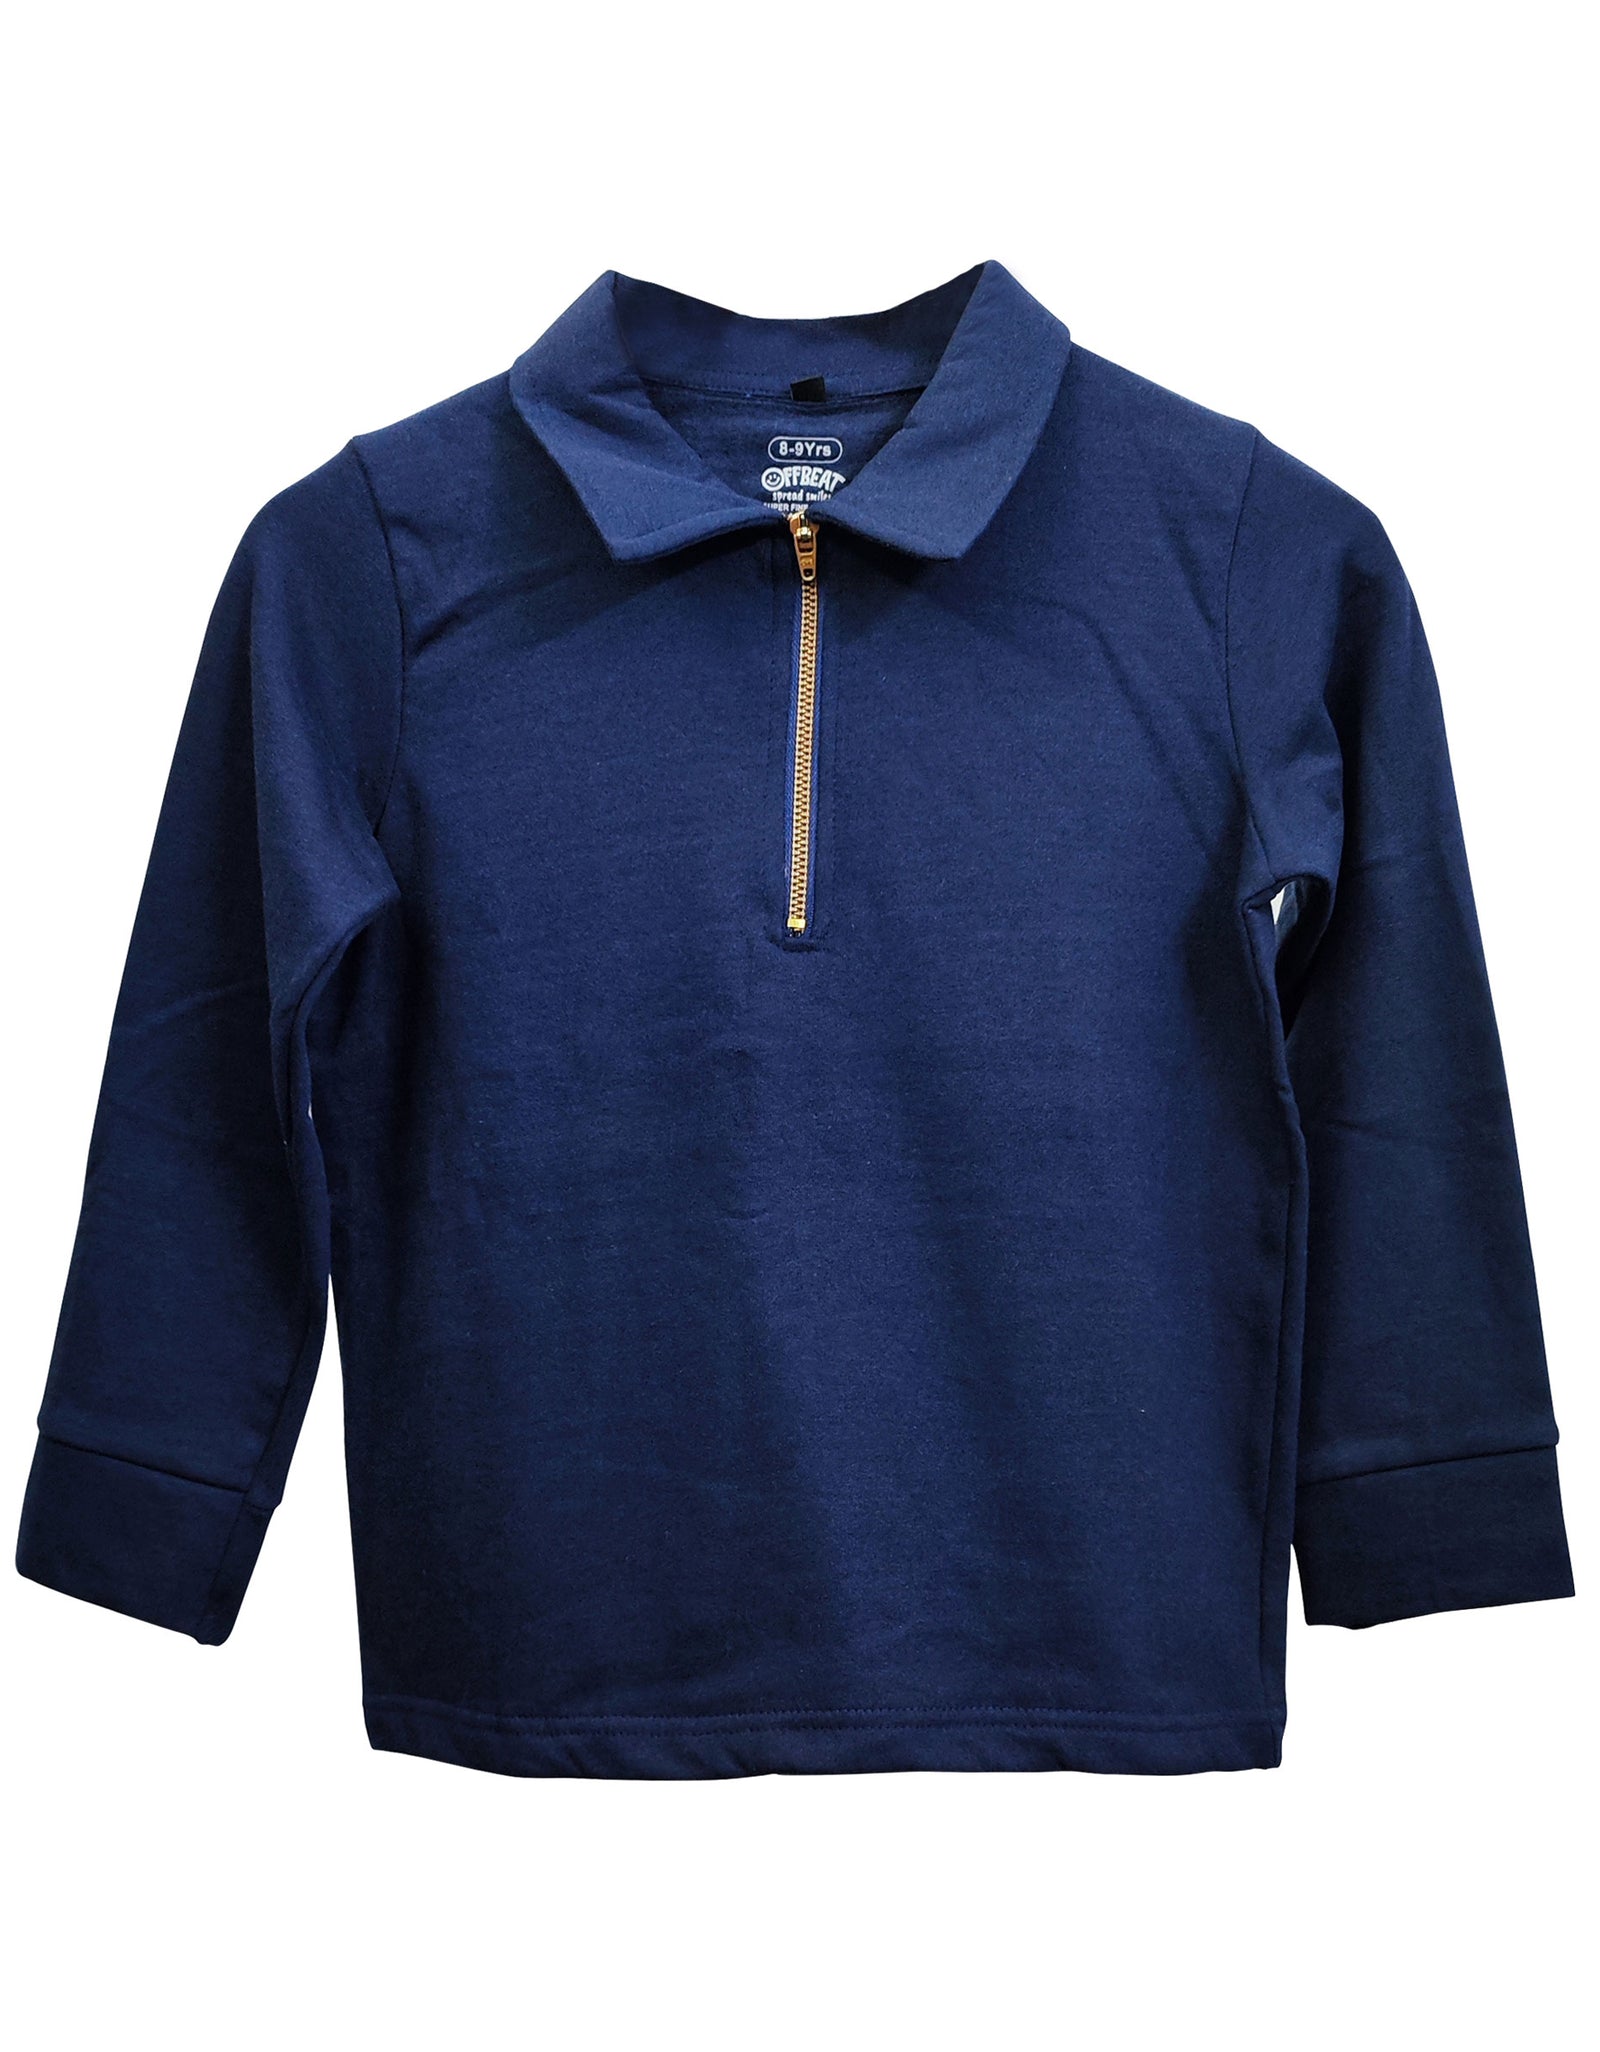 Sweatshirt for Kids  - Navy Blue